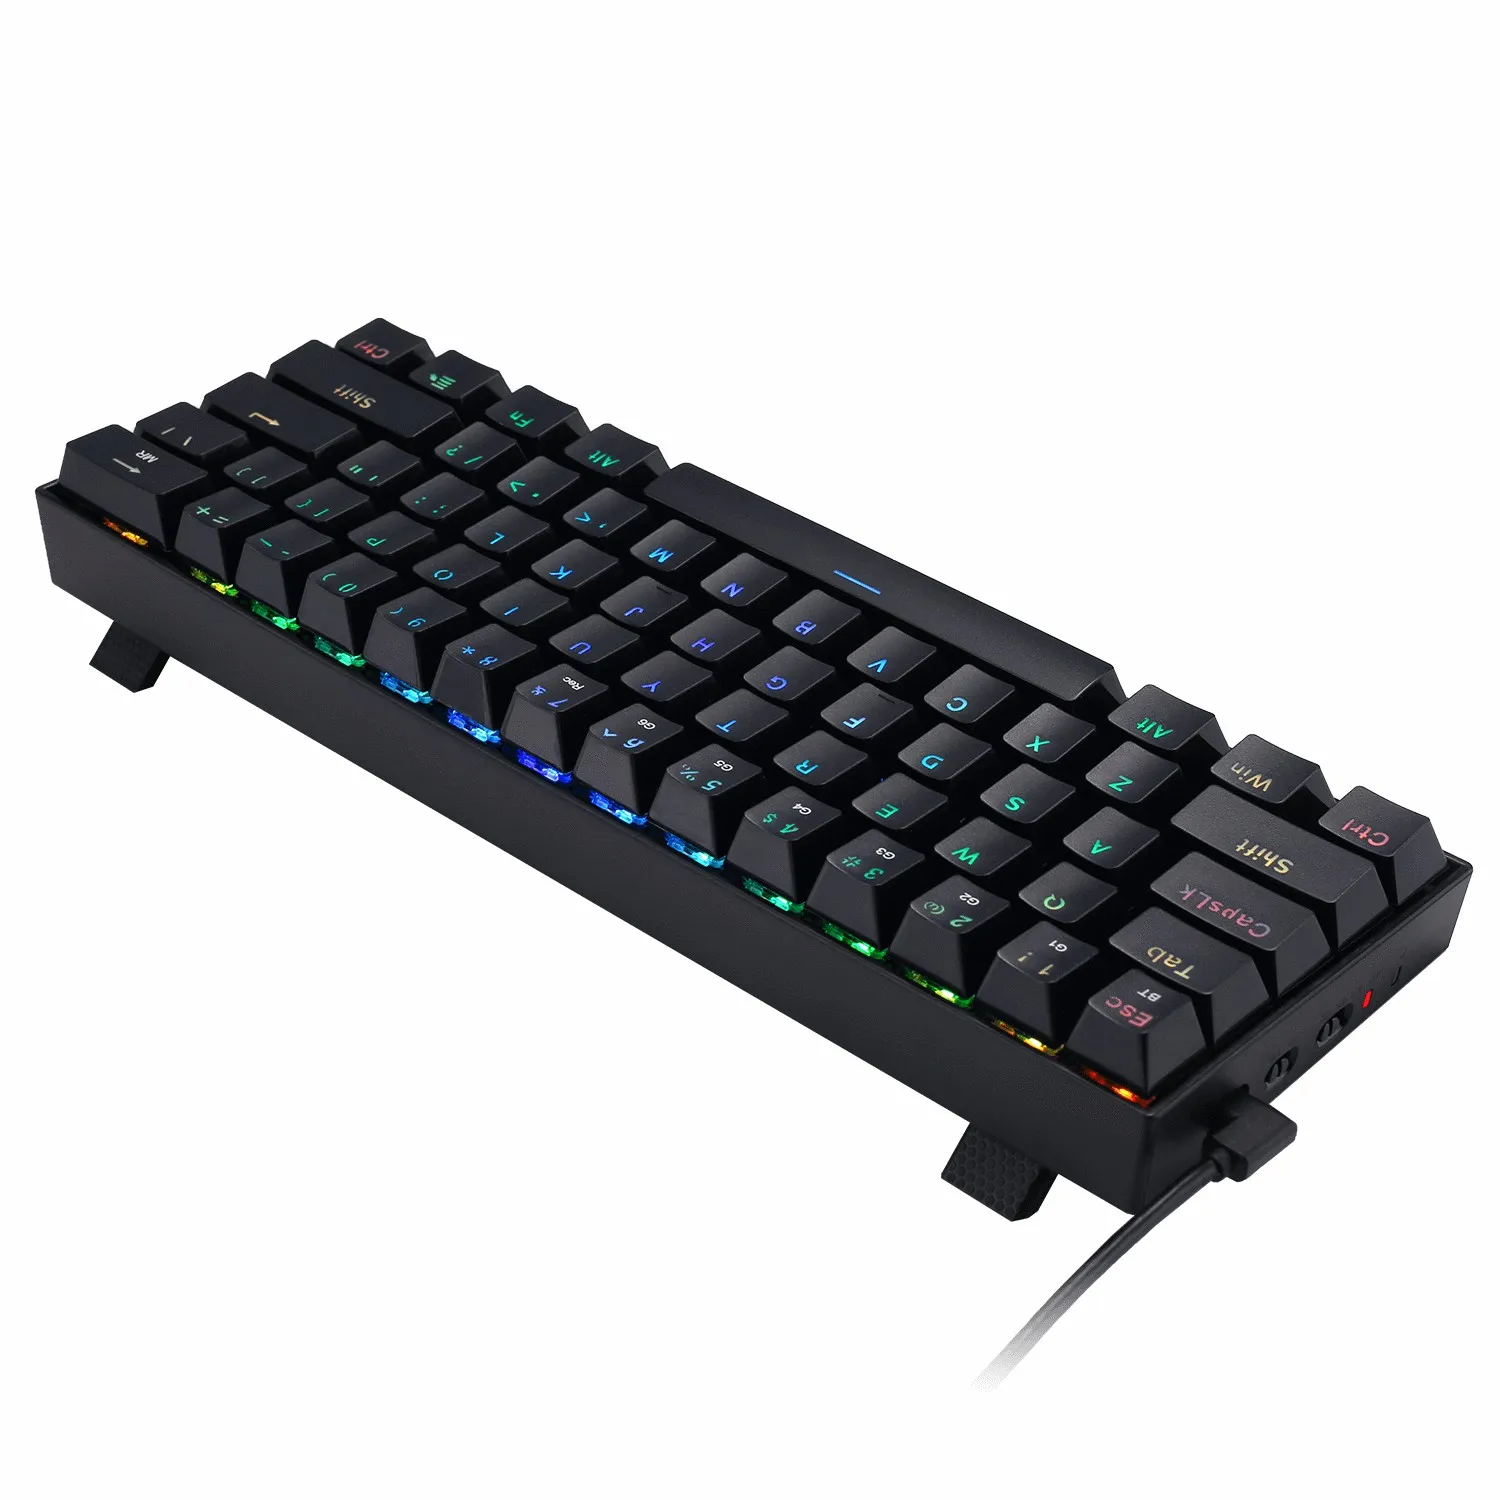 New Product Redragon K530 Bluetooth Gaming Mechanical Keyboard - Buy 